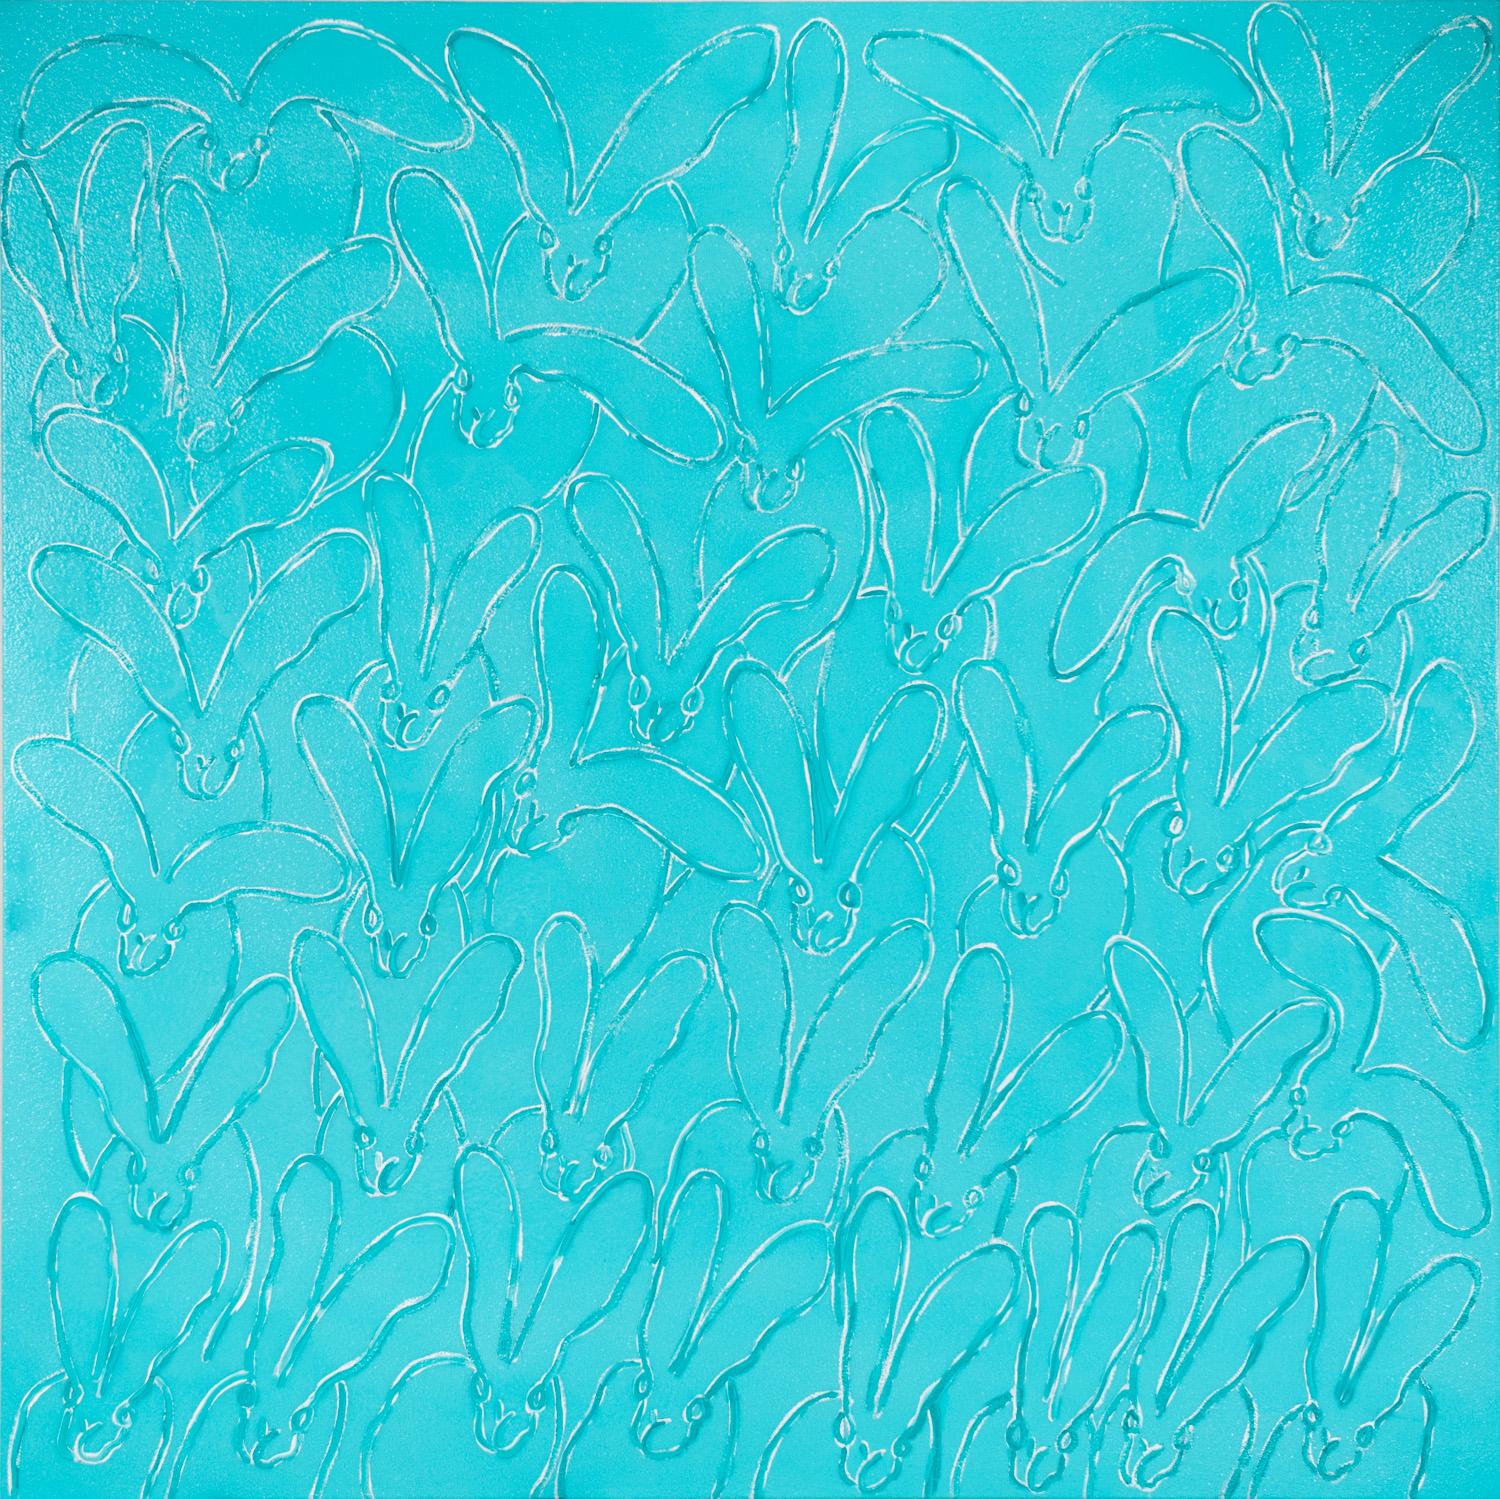 Aqua Dust - Painting by Hunt Slonem